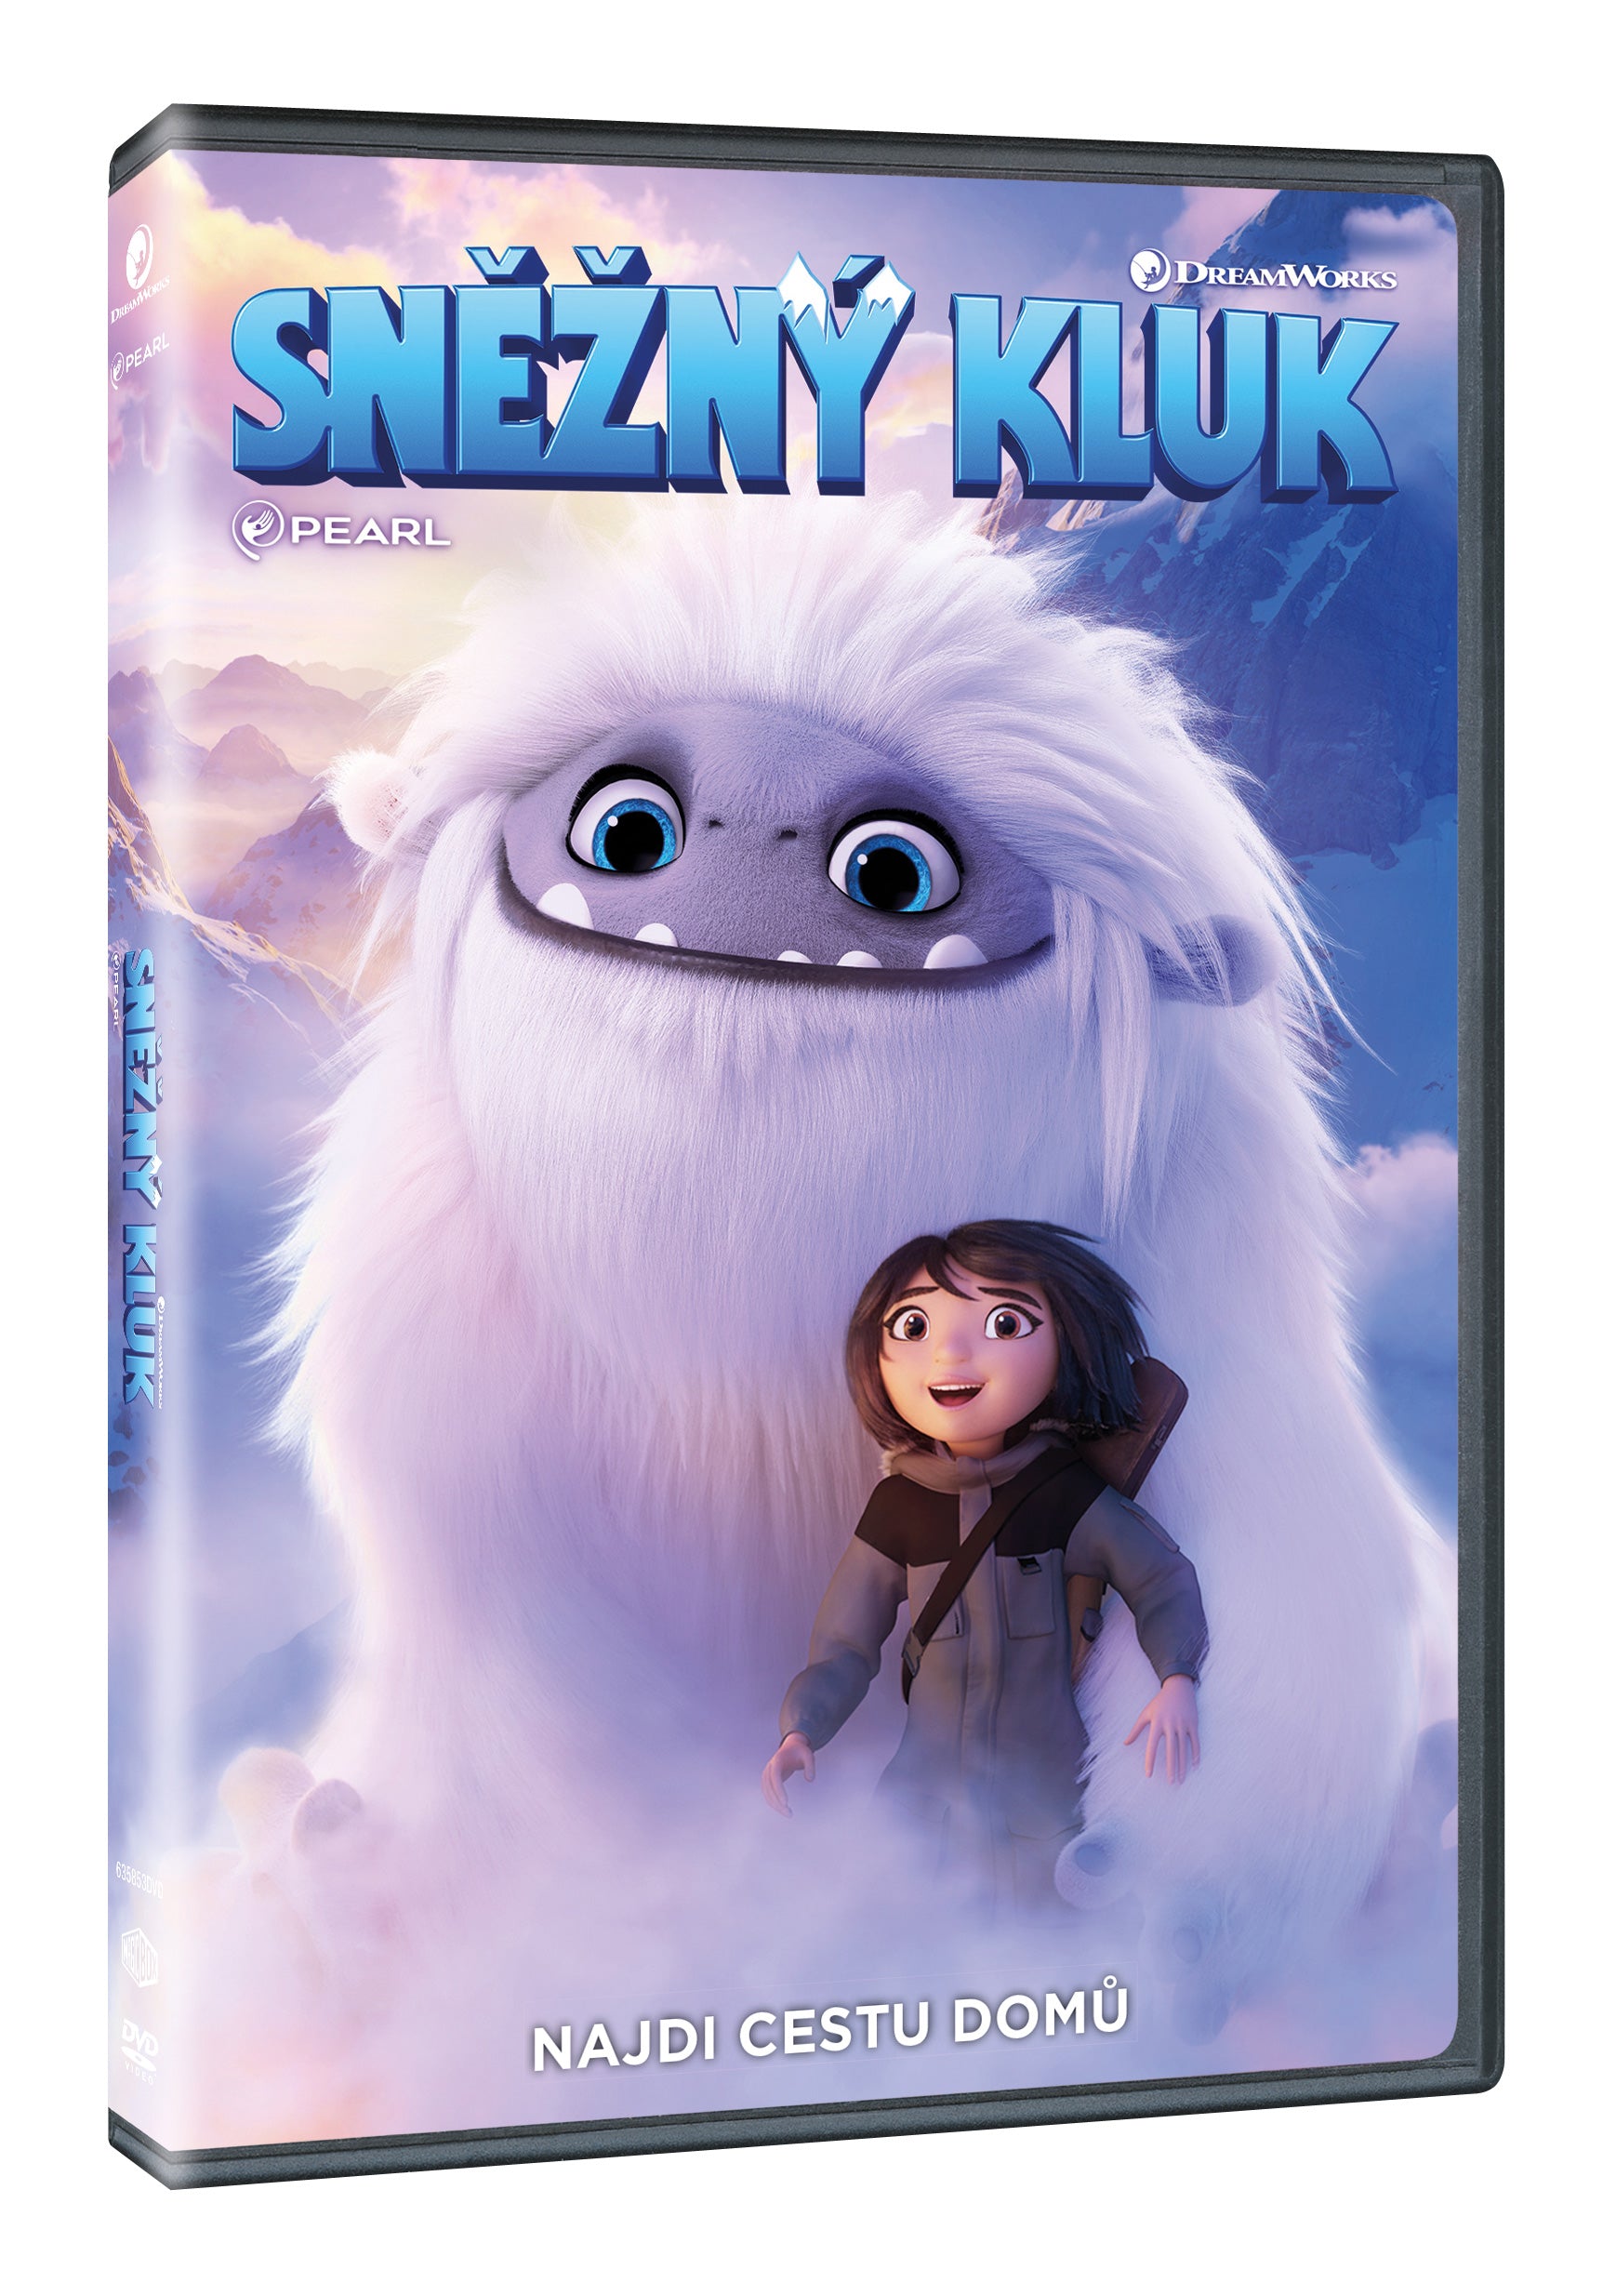 Snezny kluk DVD / Abominable